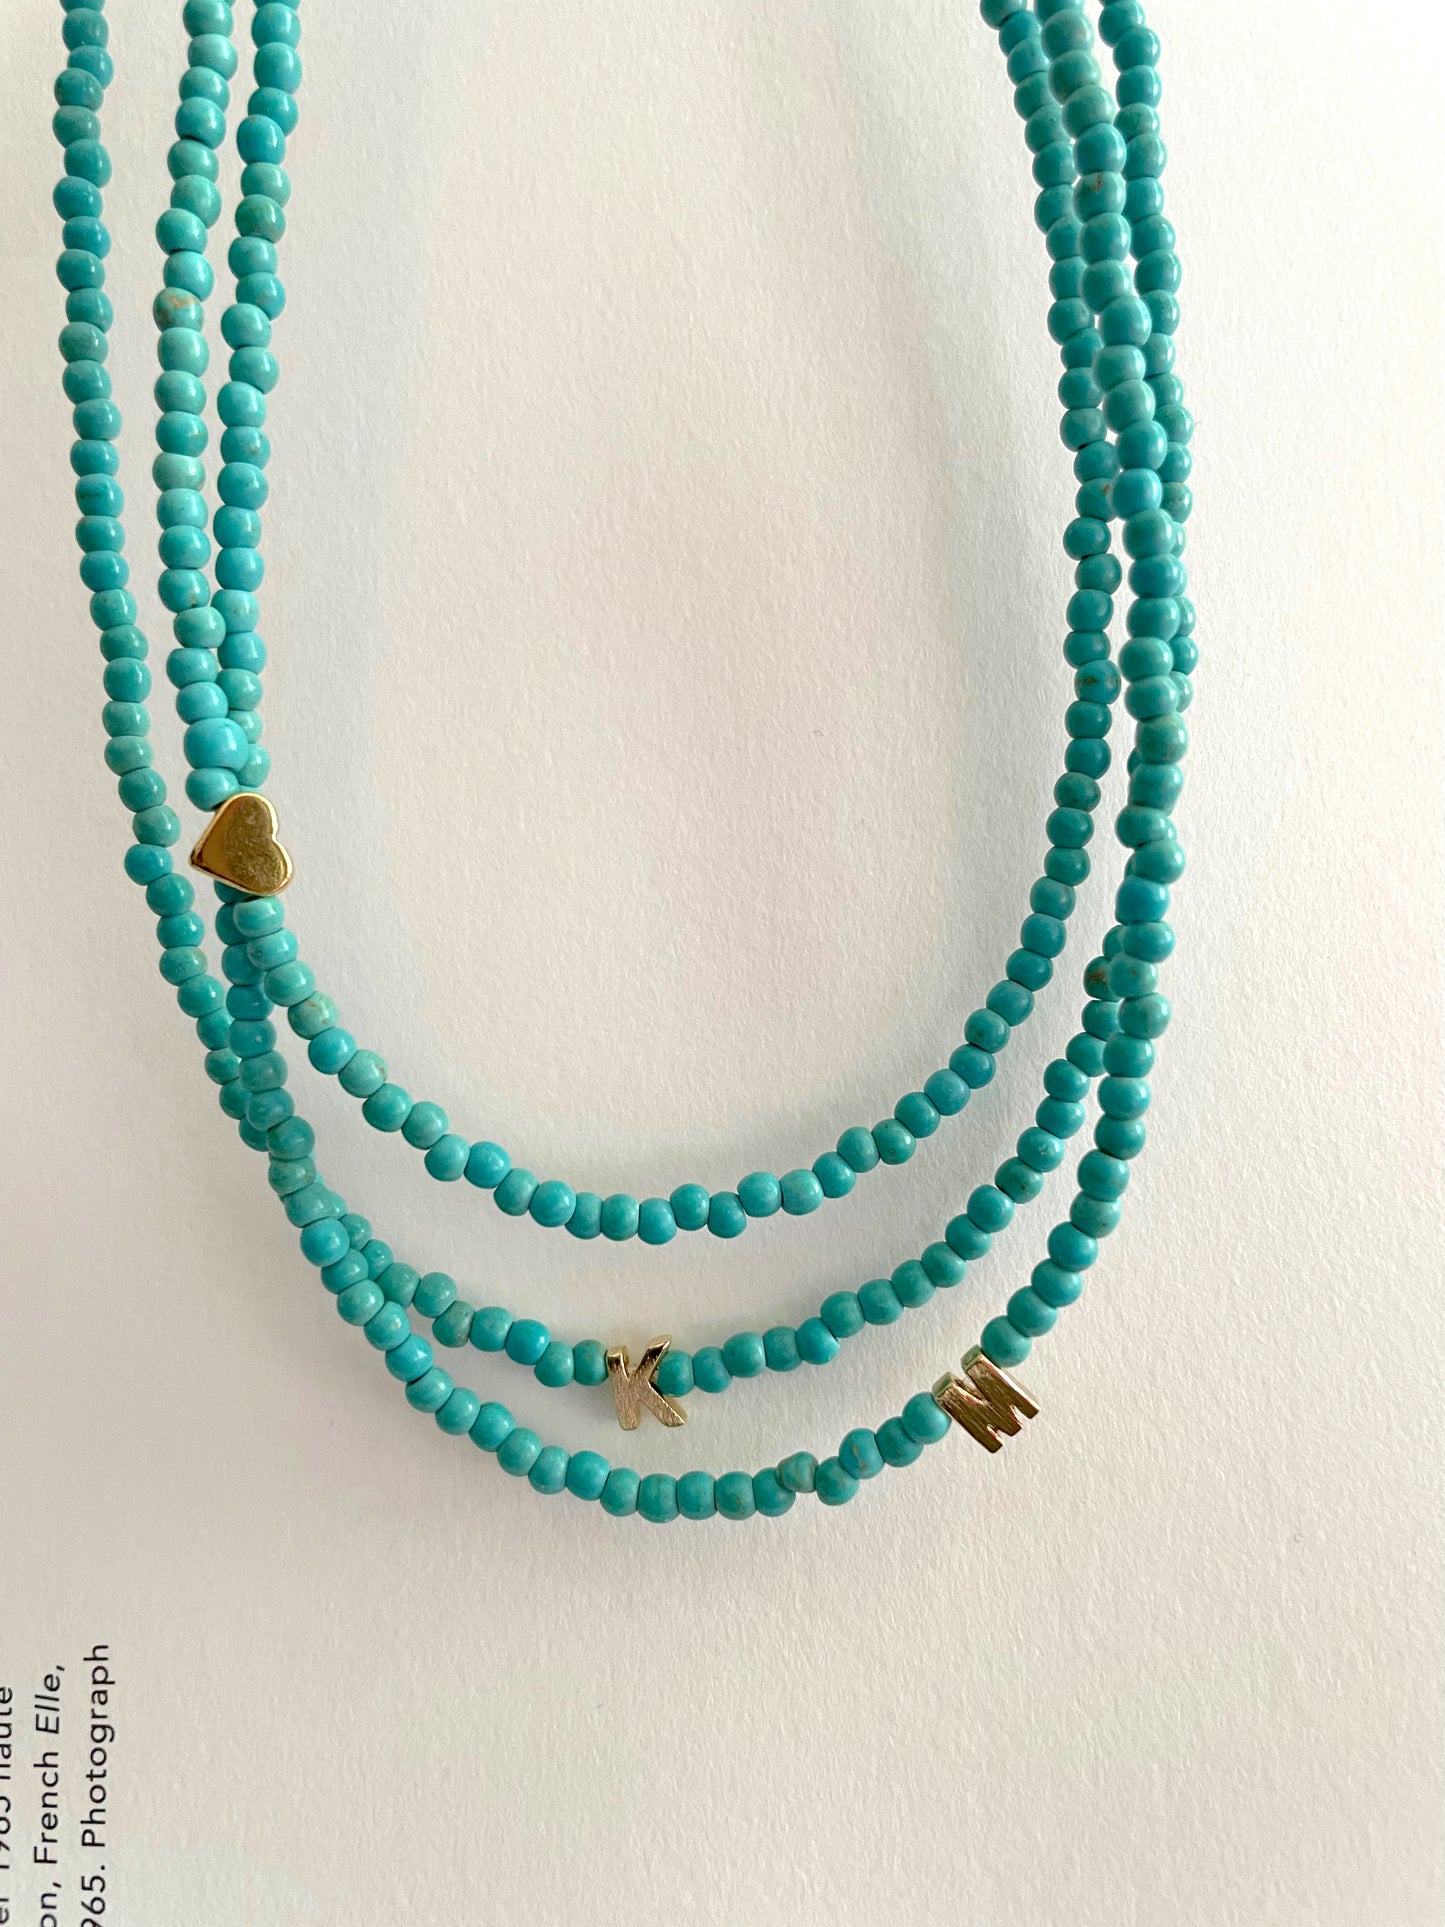 Turquoise mini beads necklace